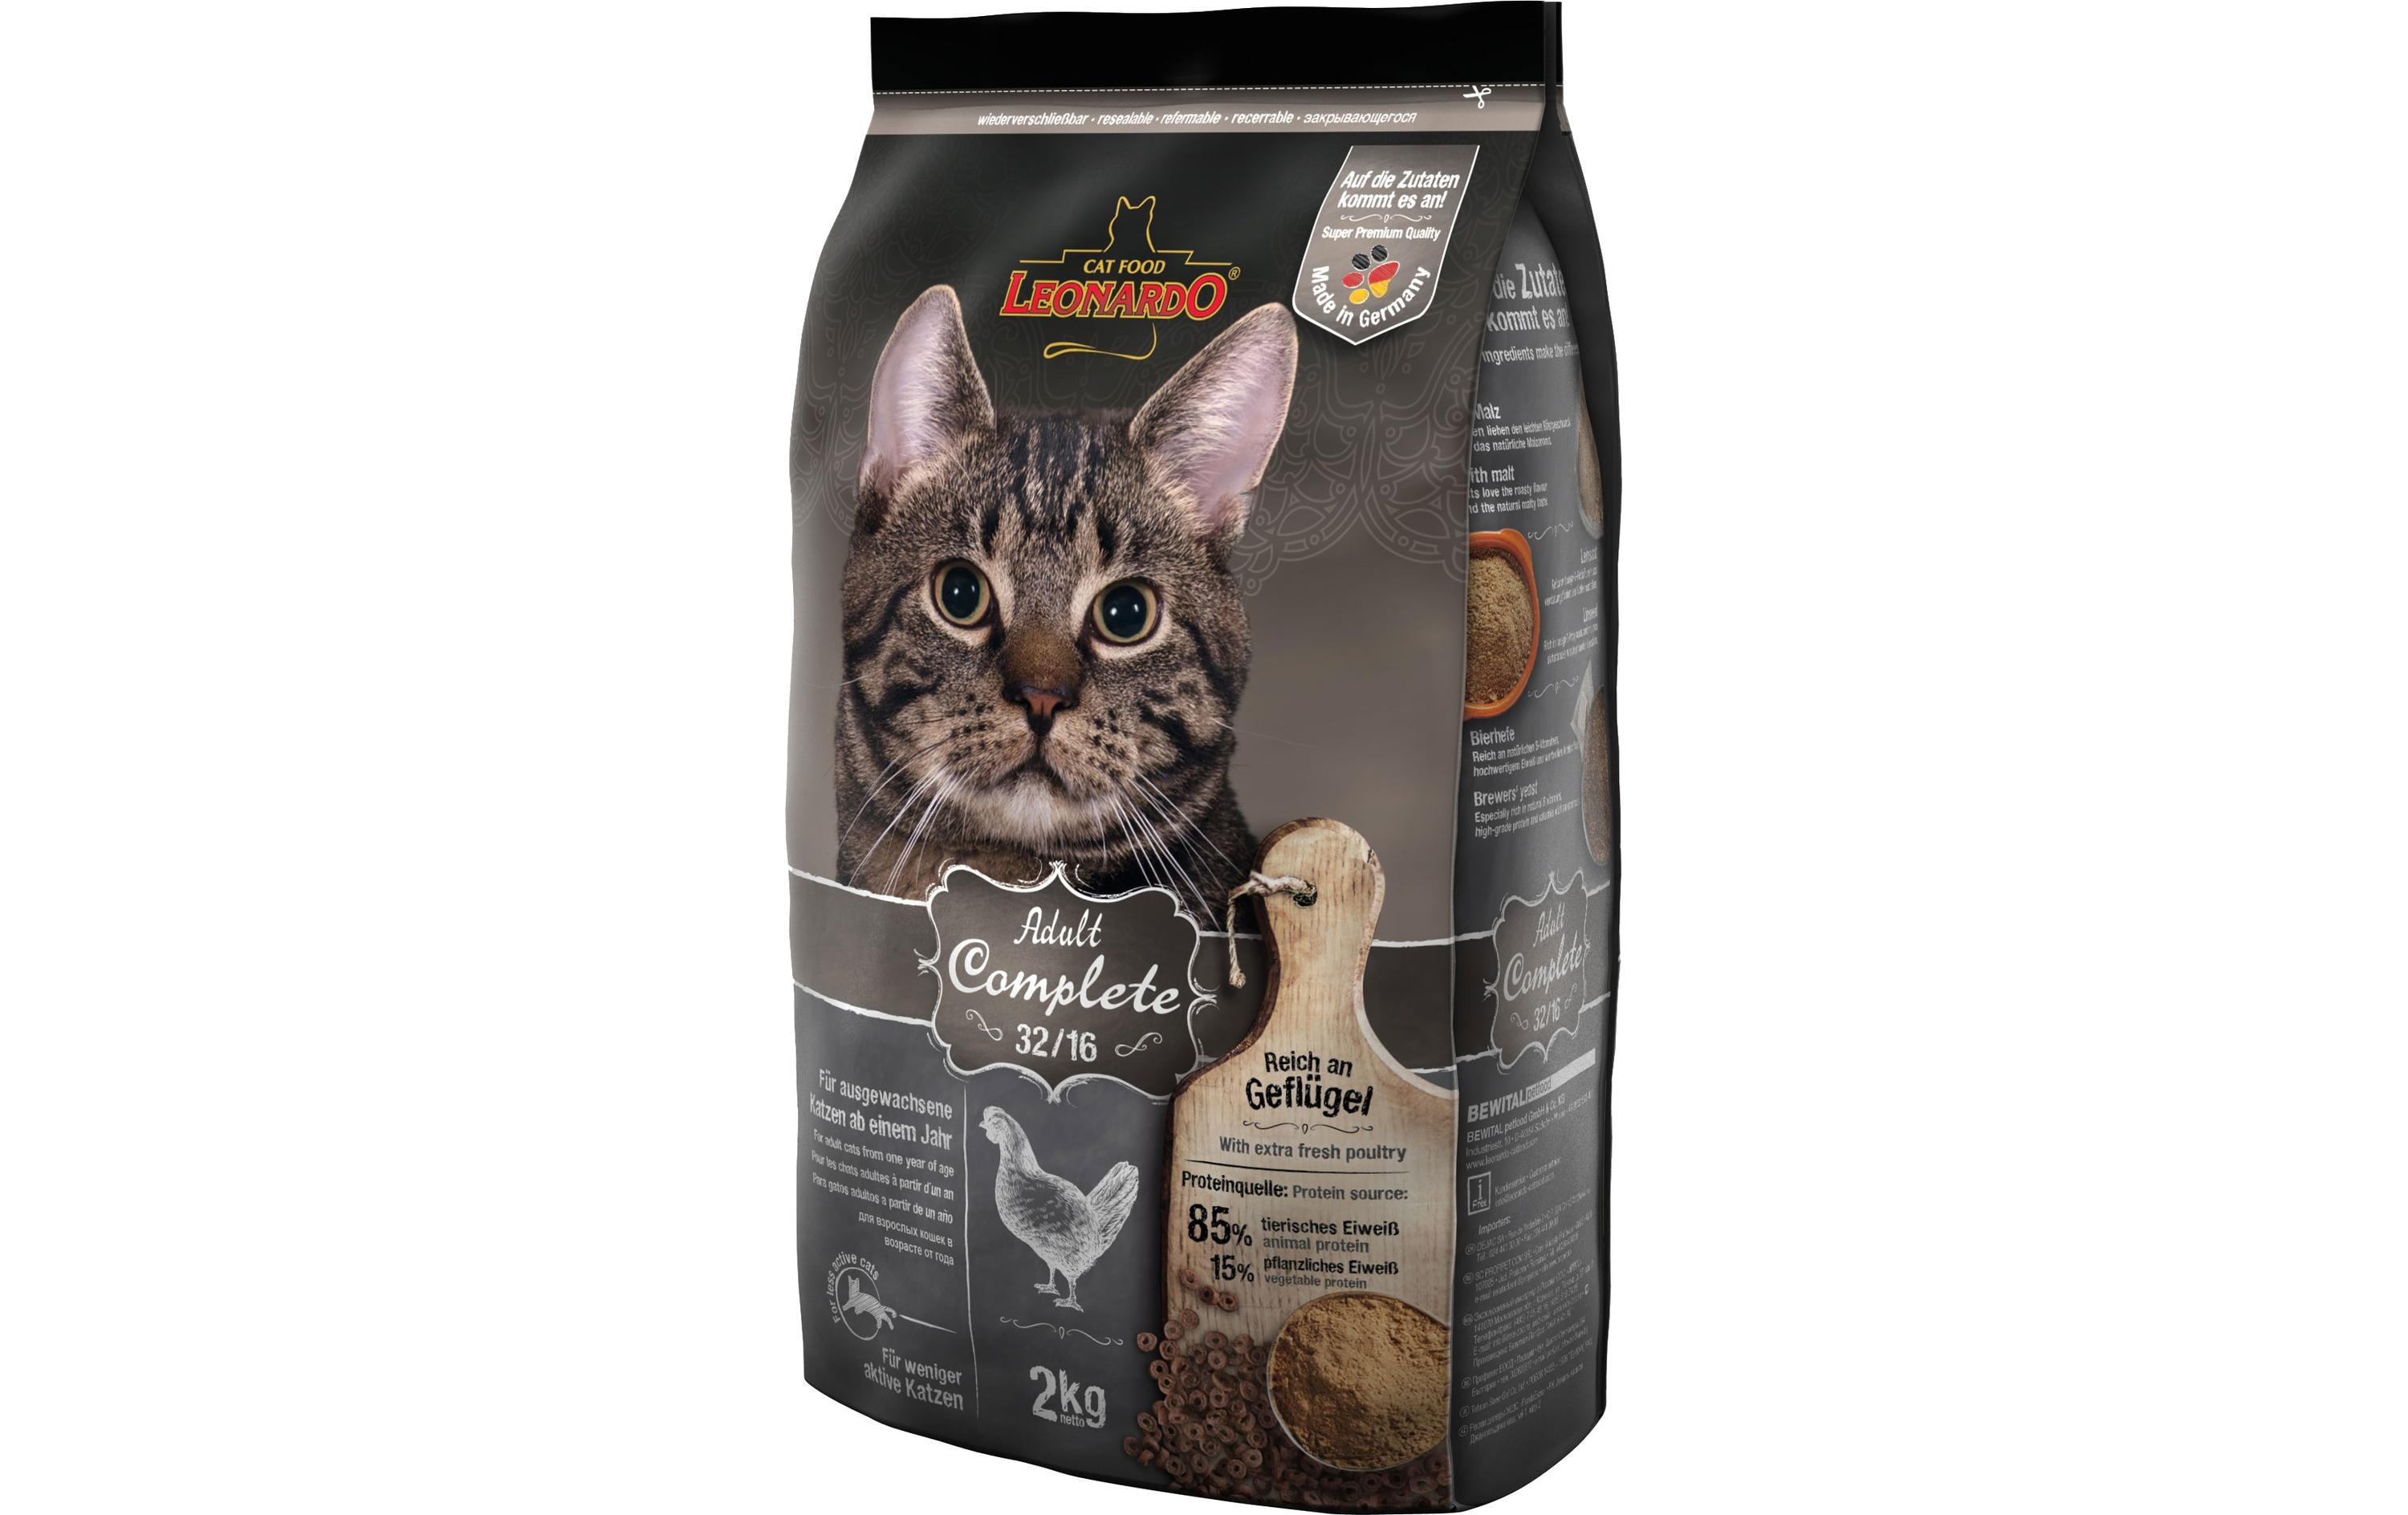 Leonardo Cat Food Trockenfutter Adult Complete 32/16, 2 kg